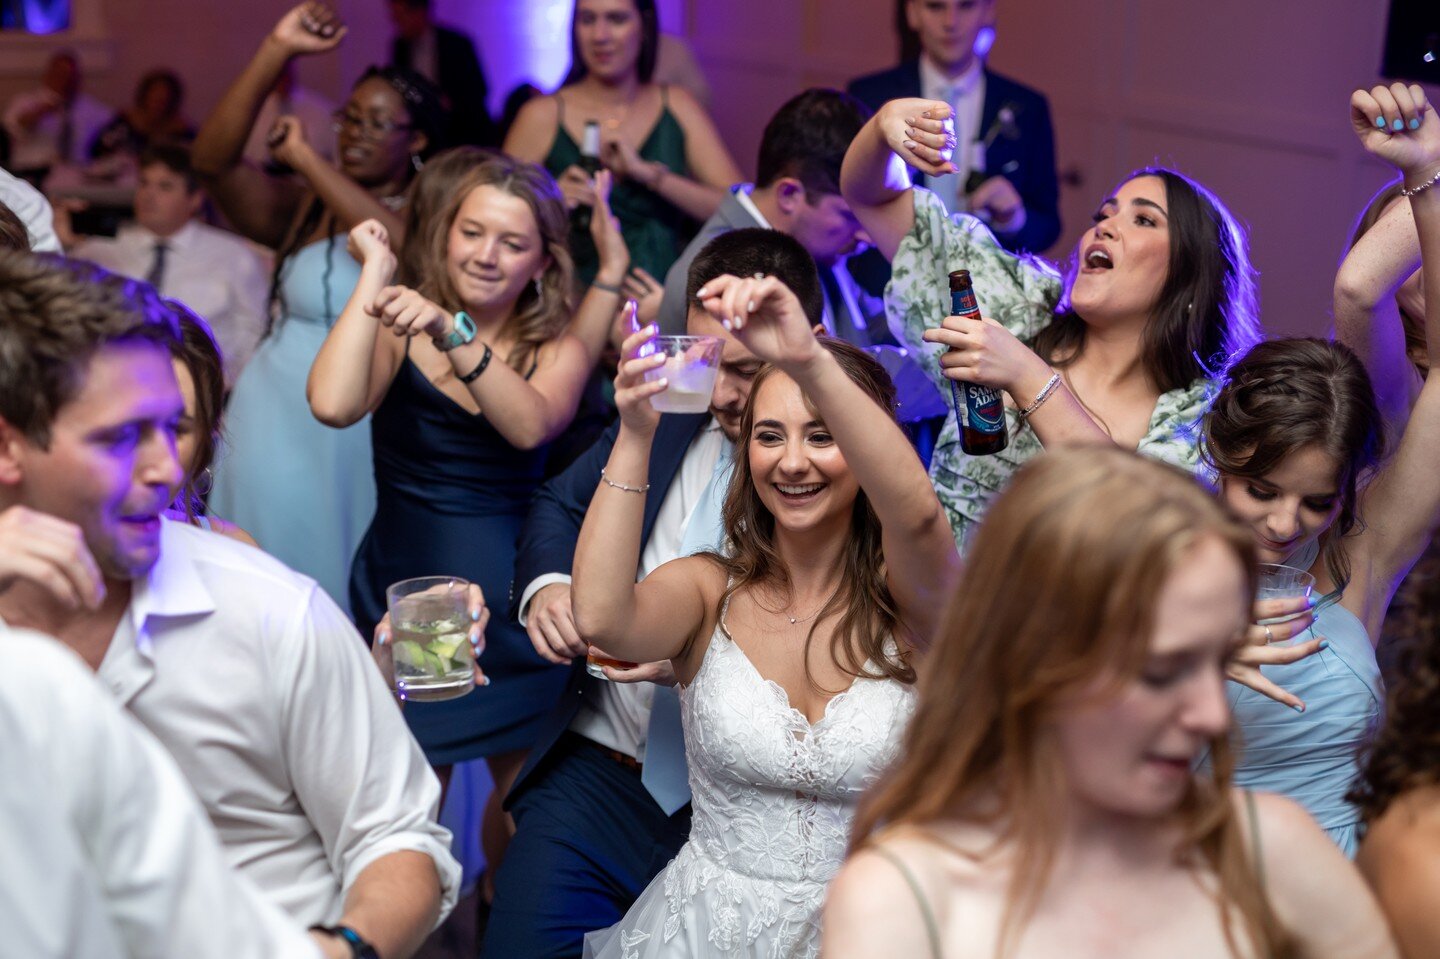 When the whole venue becomes a dance floor 🤯

@doug_burke_photography @bluebellweddingsnc @thedockraleigh 

#raleighwedding #raleighweddingdj #ncweddingdj #durhamwedding